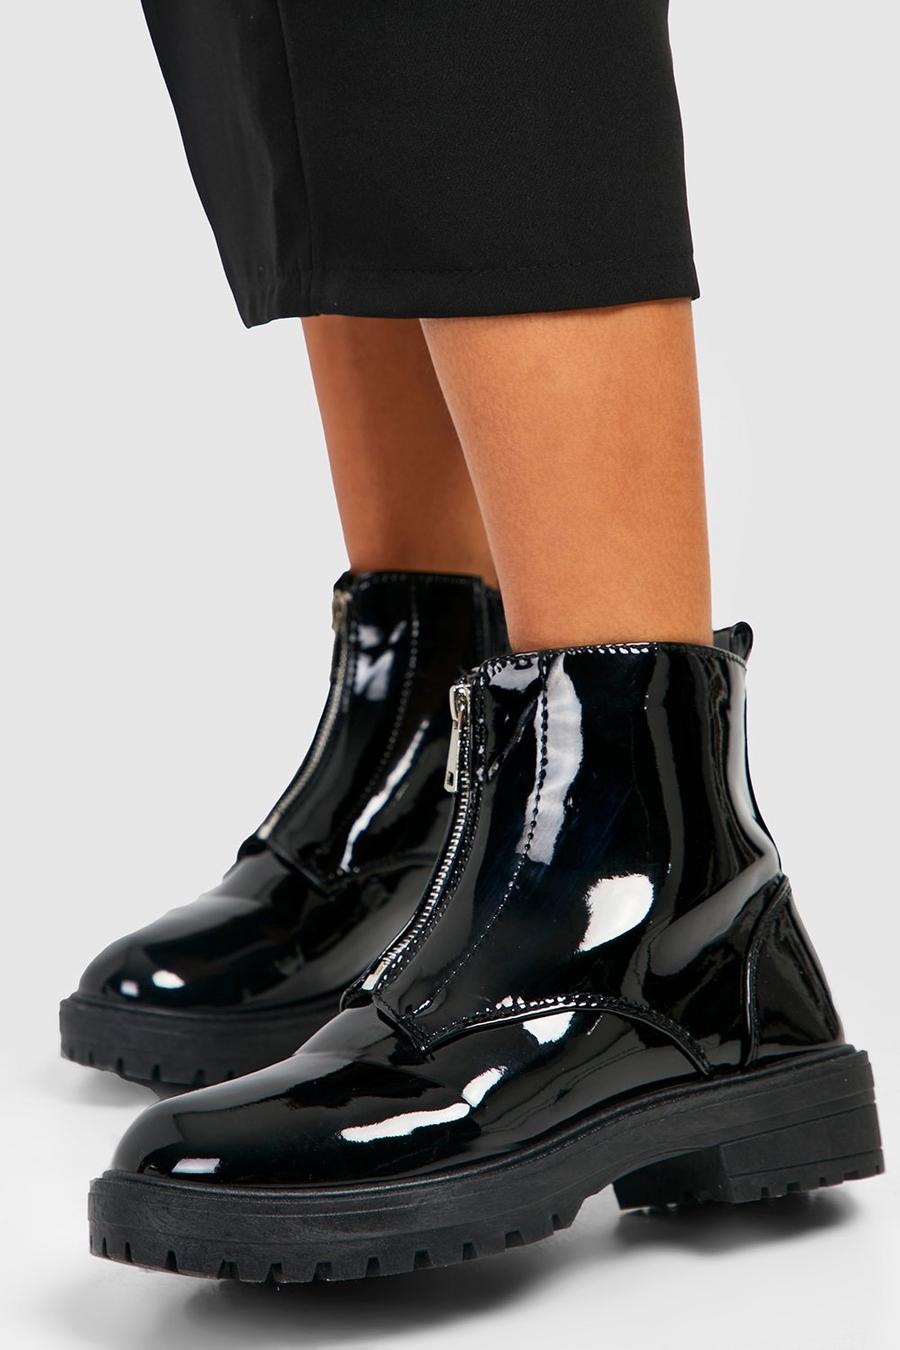 Black Zip Front Patent Flat Ankle Boots